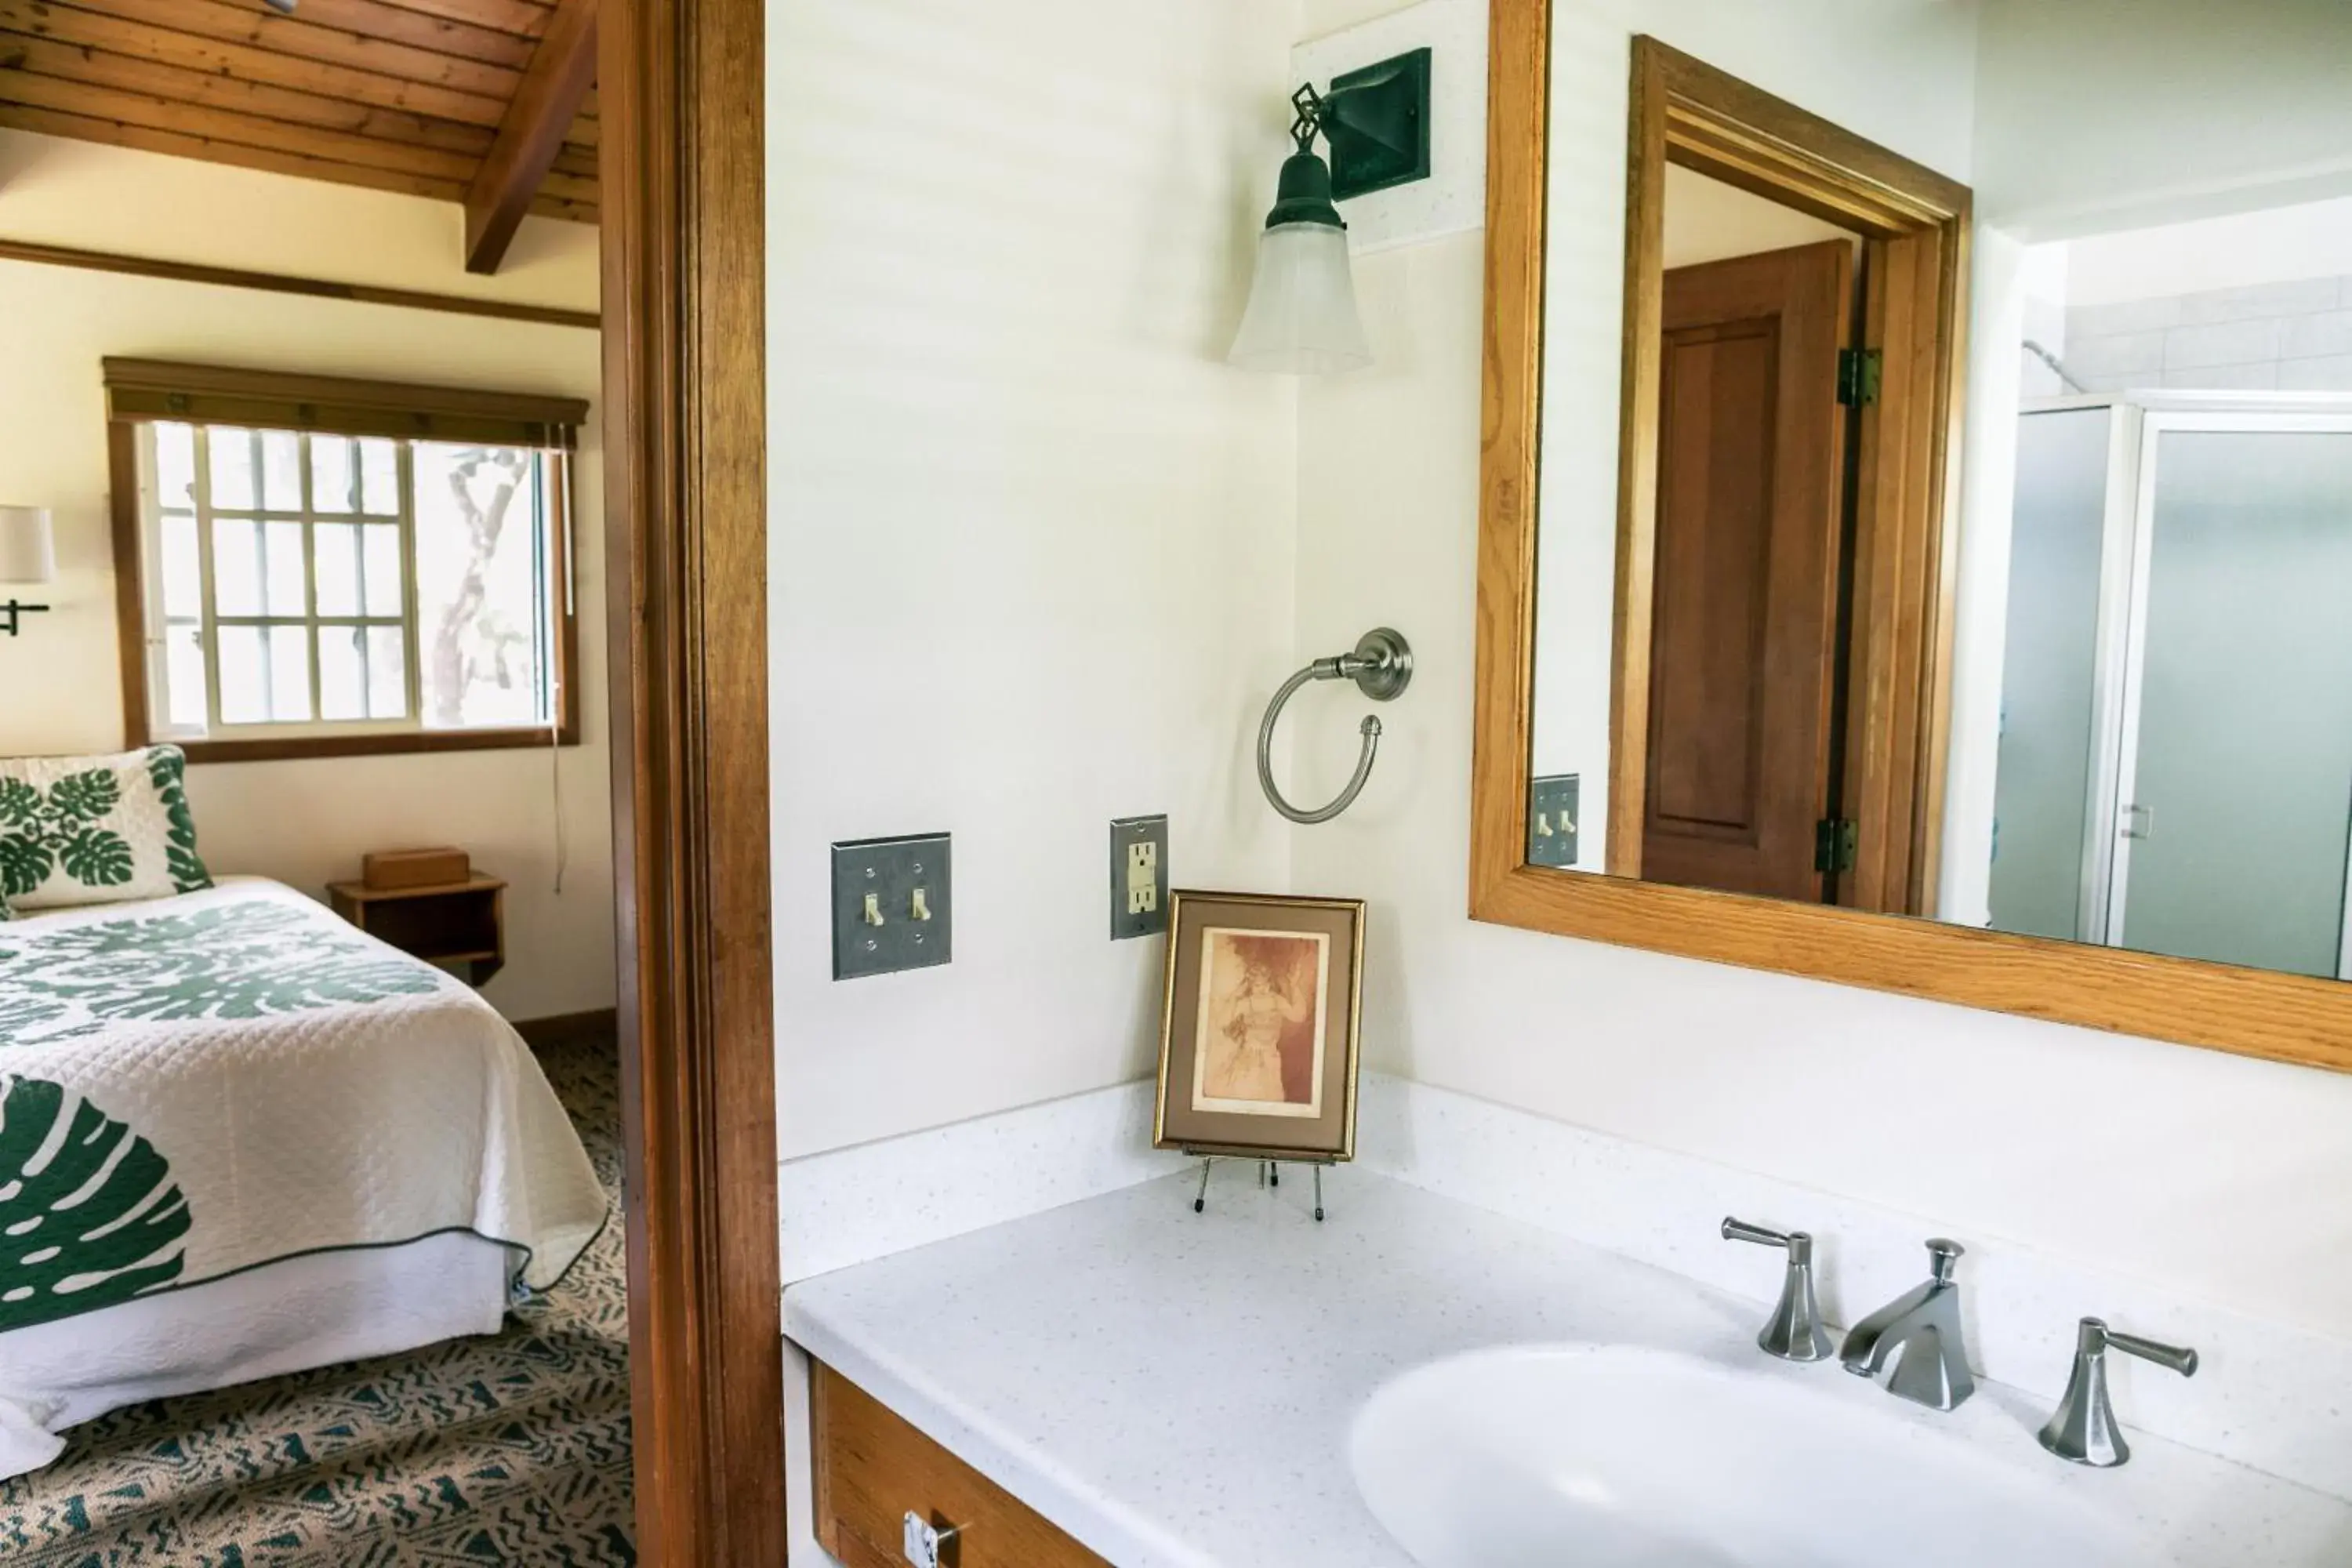 Bathroom in Kilauea Lodge and Restaurant